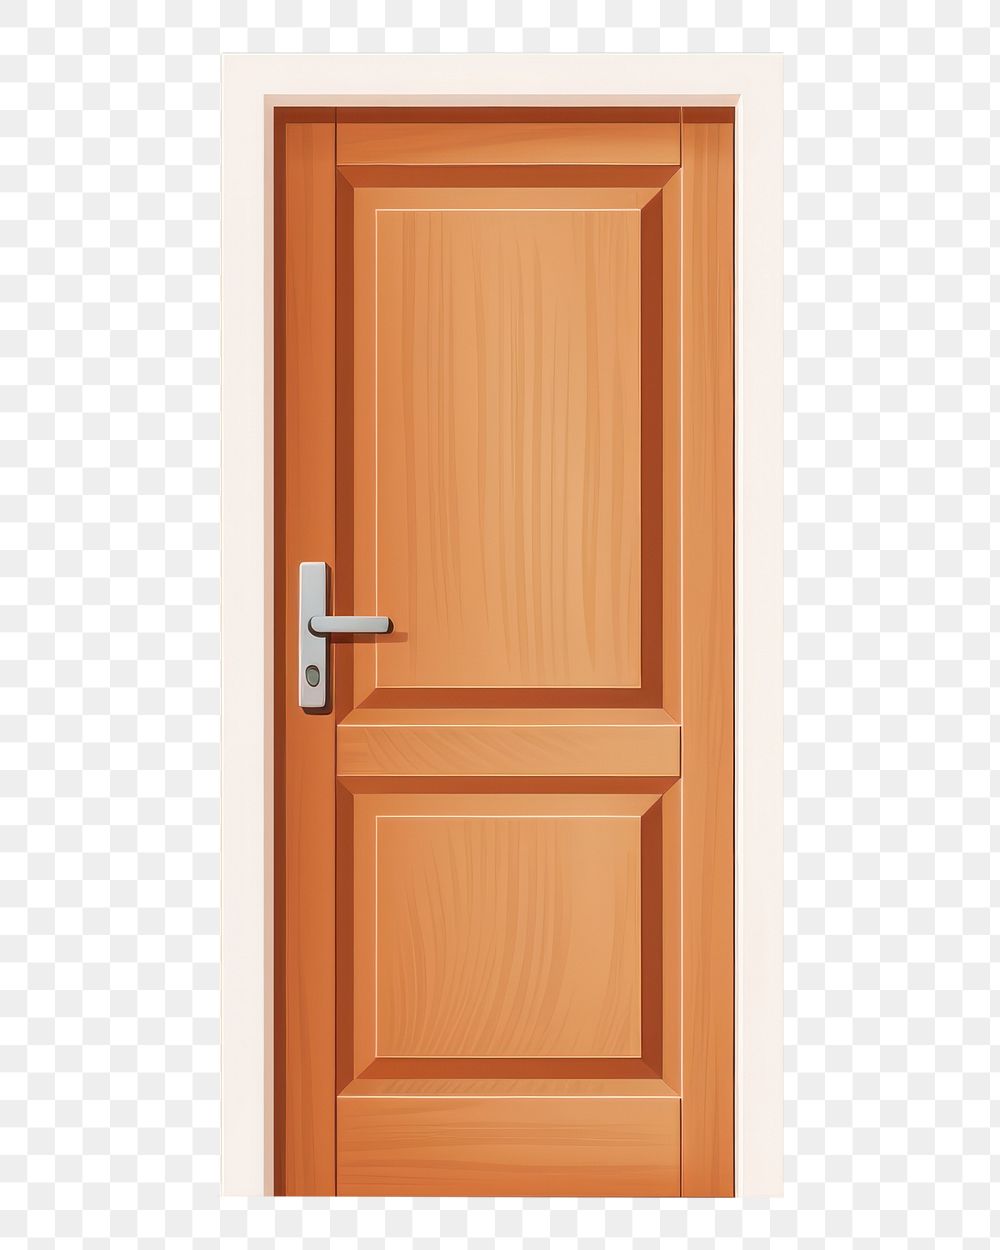 Door wood architecture protection.